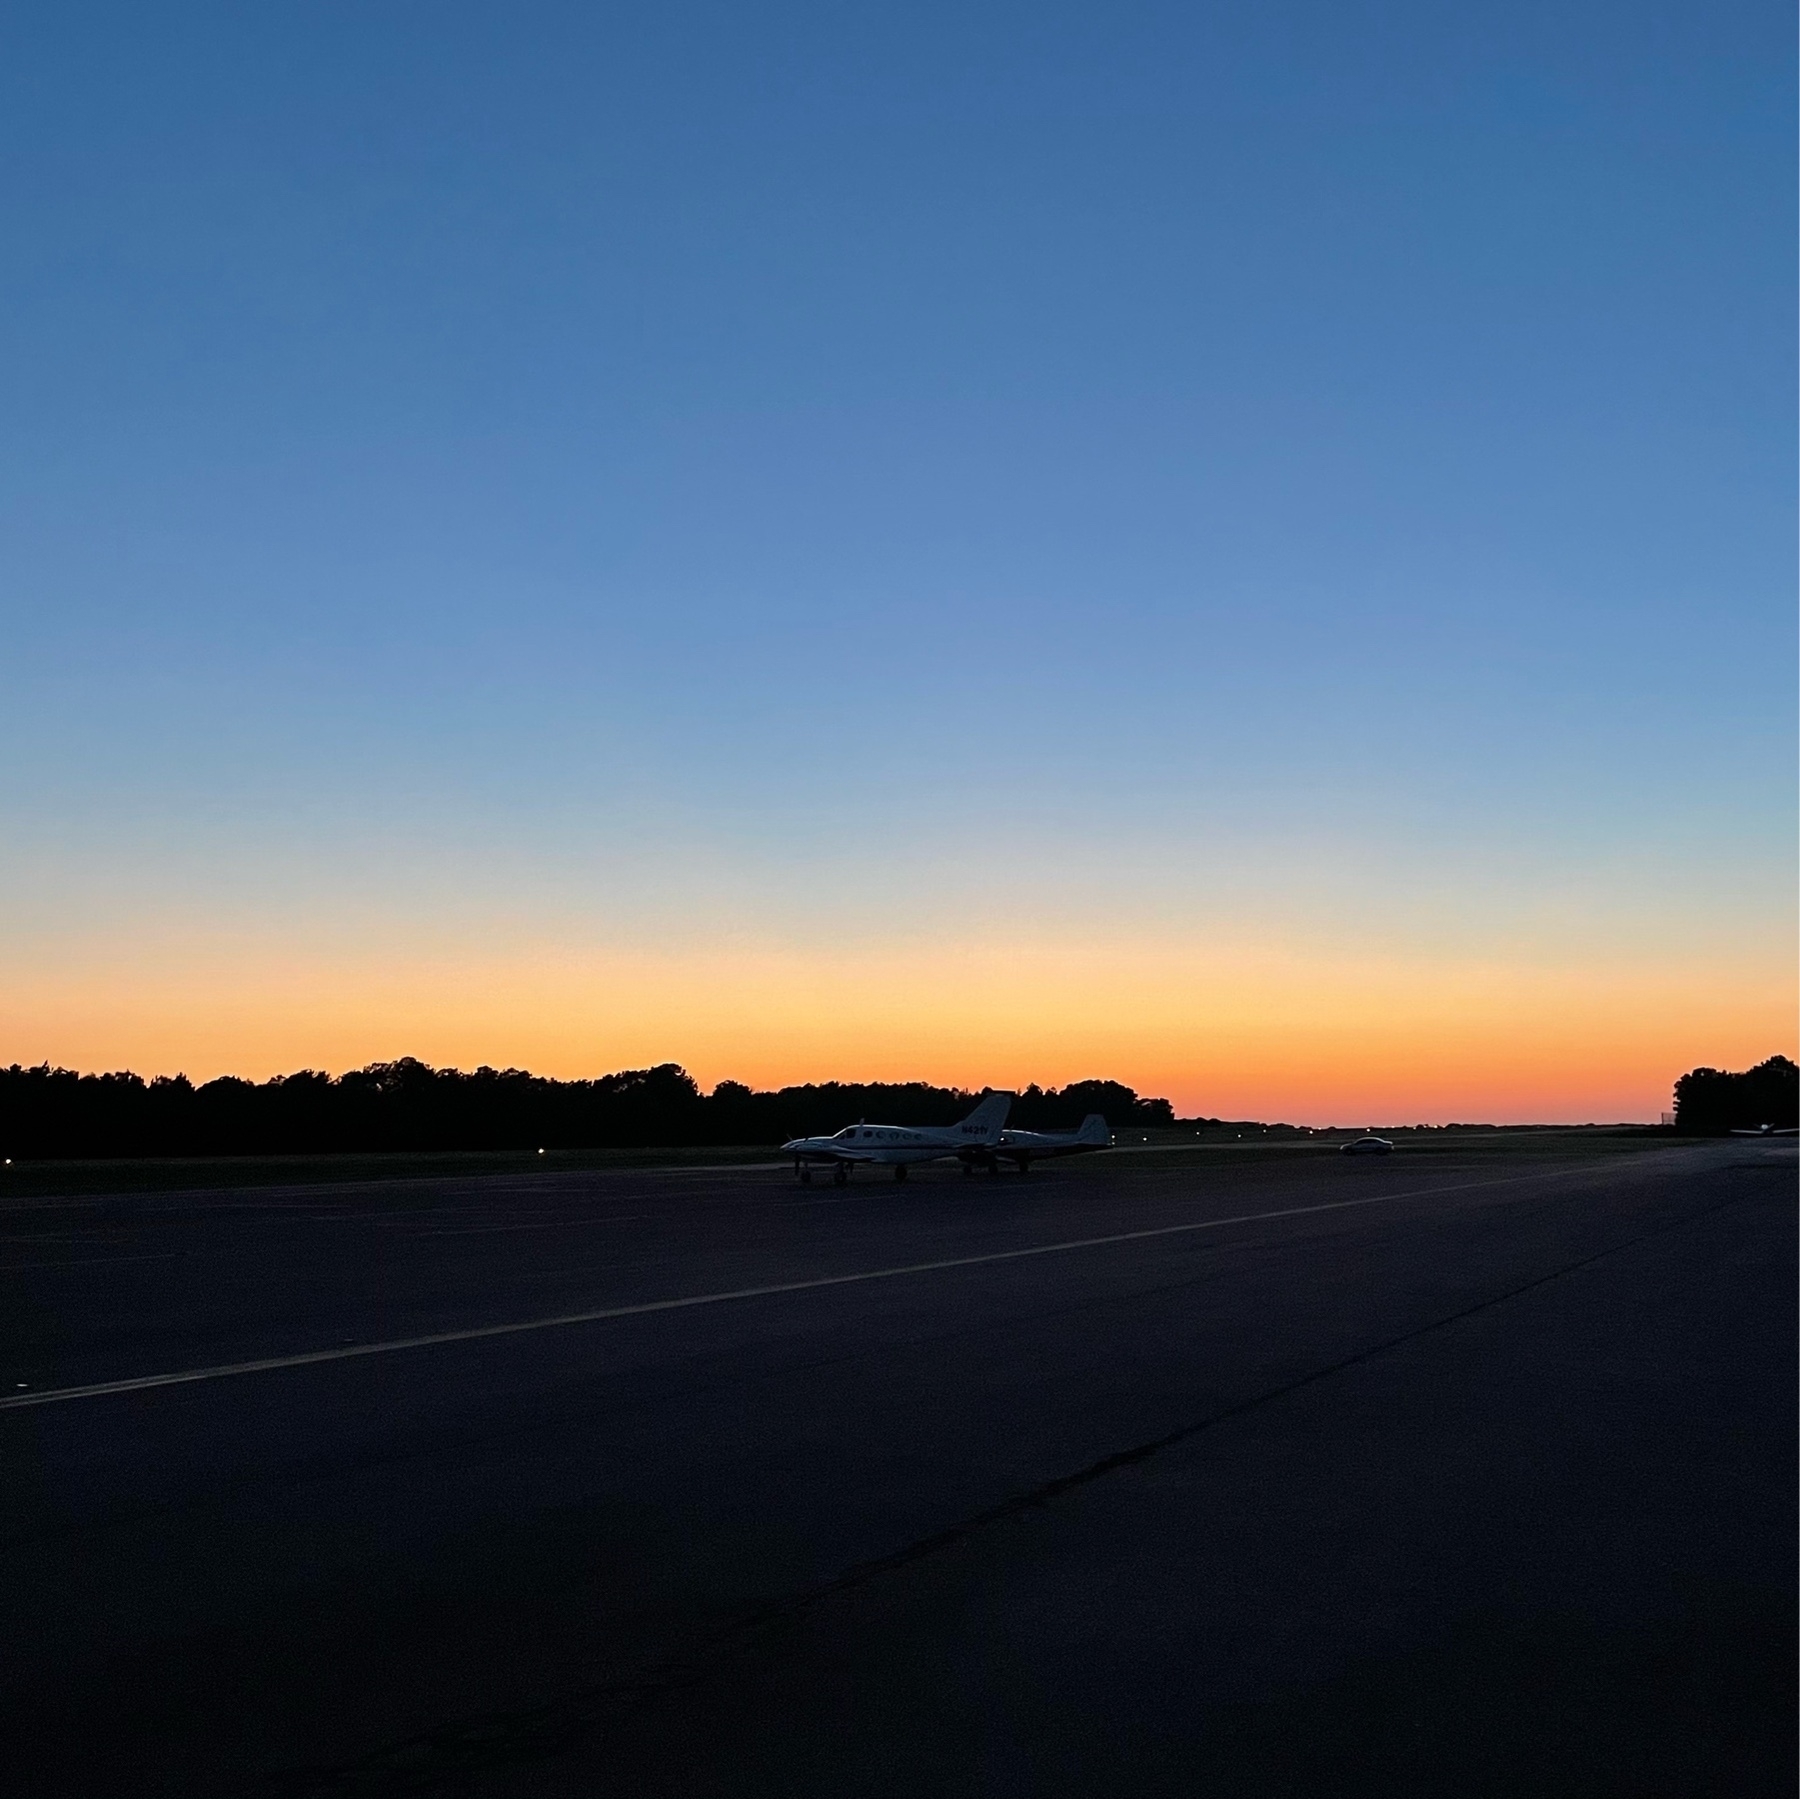 Sunset on airport ramp